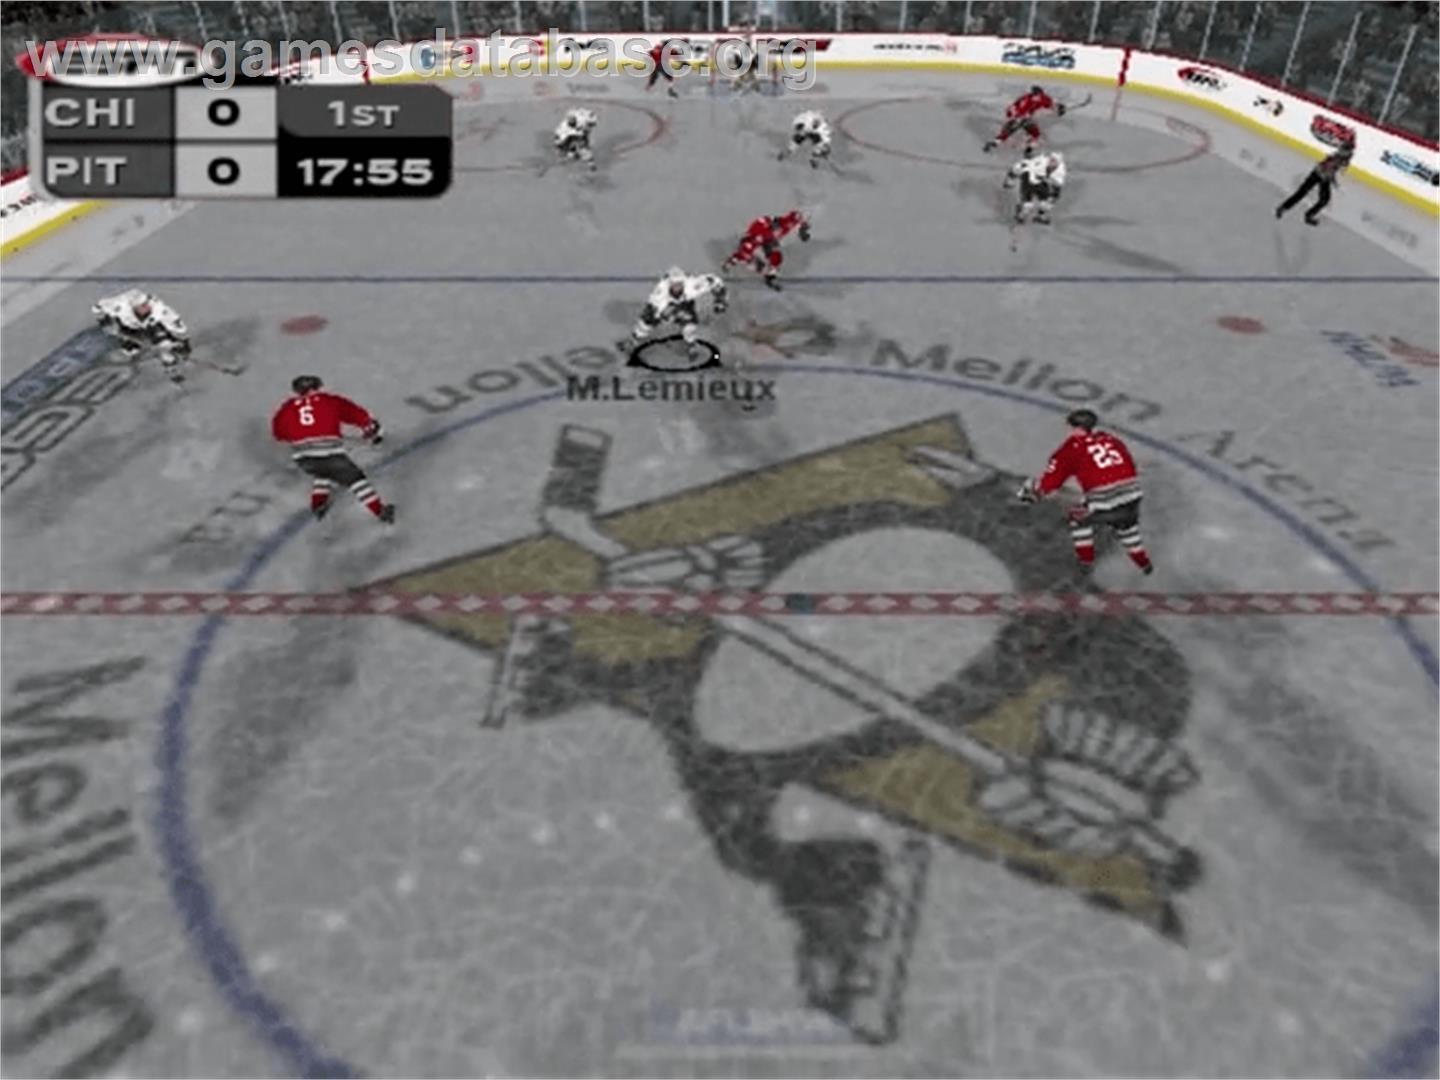 NHL 2K3 - Sony Playstation 2 - Artwork - In Game